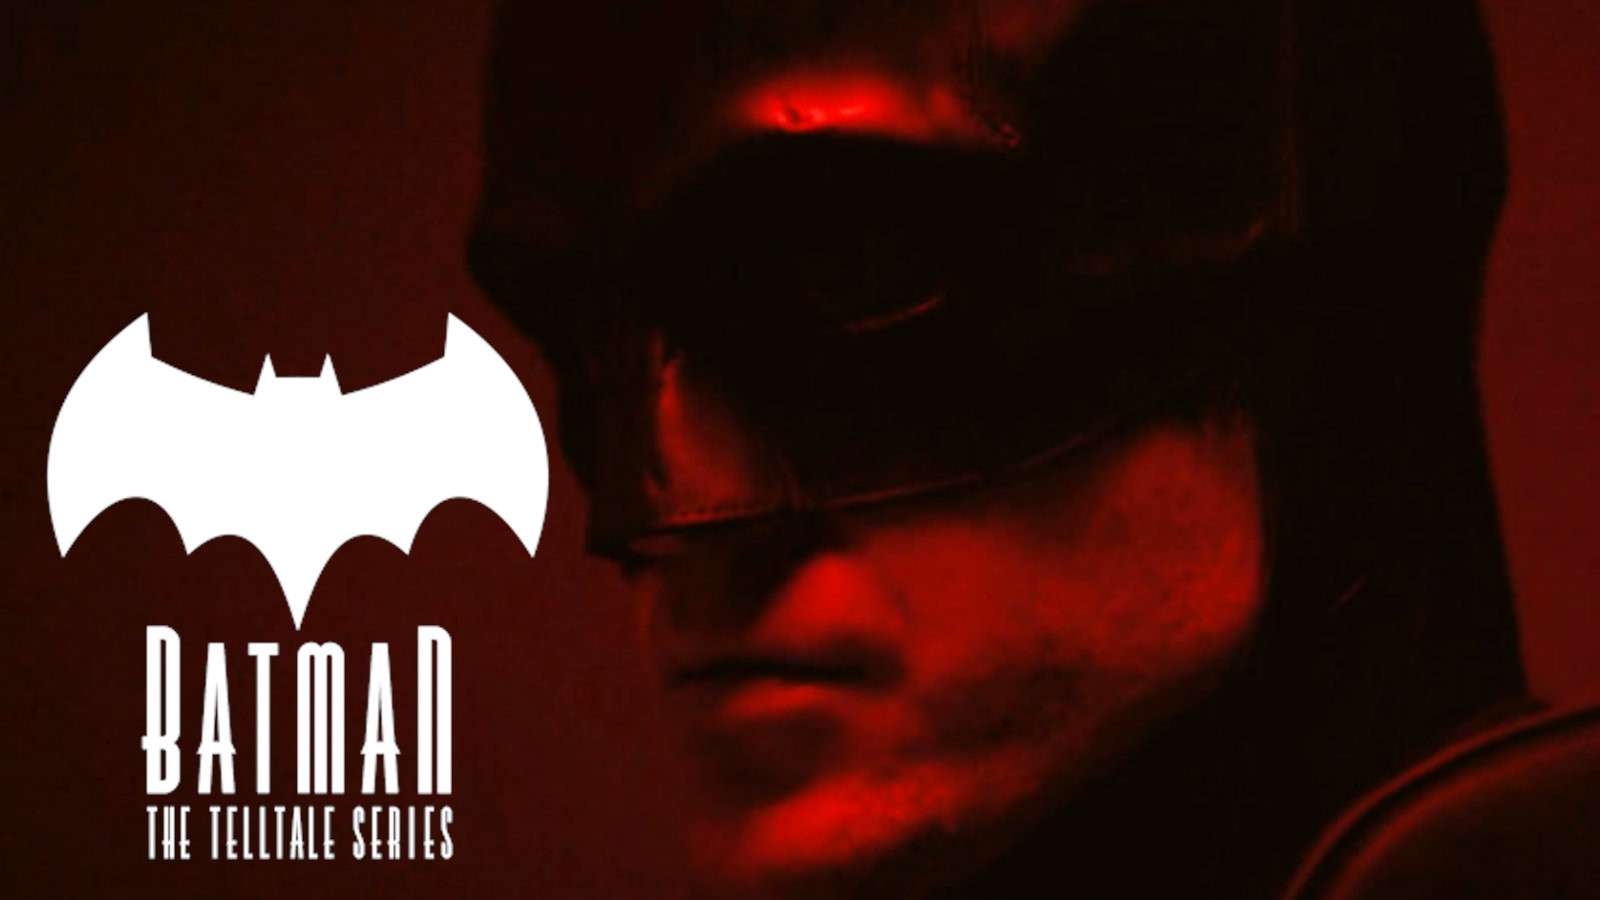 The Batman with Telltale logo